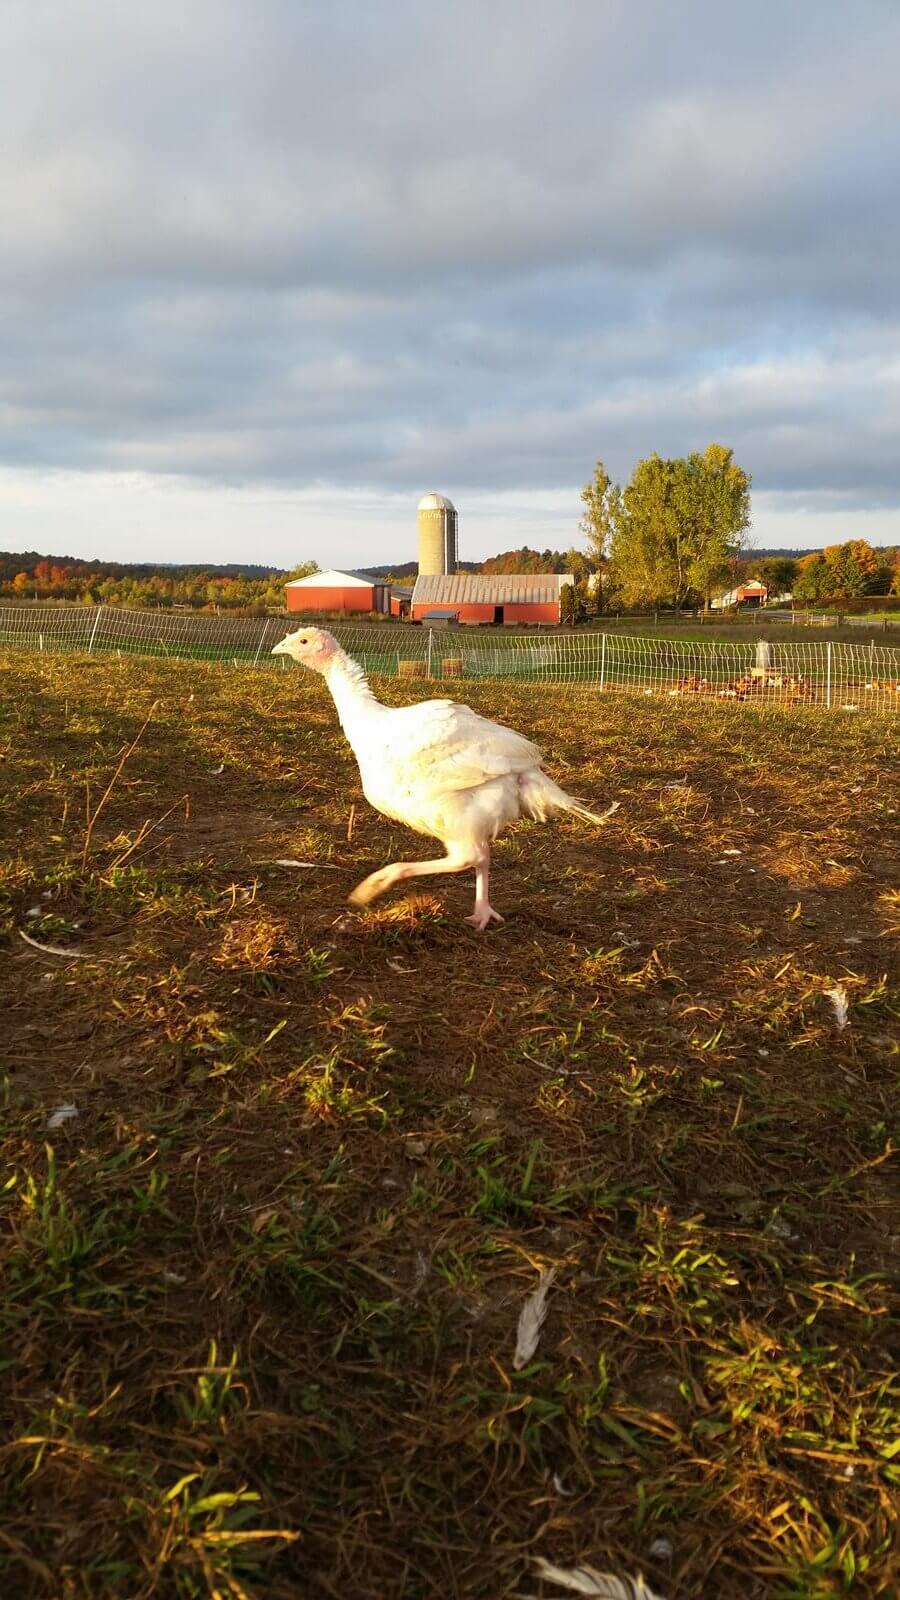 Turkey in field with barn in background